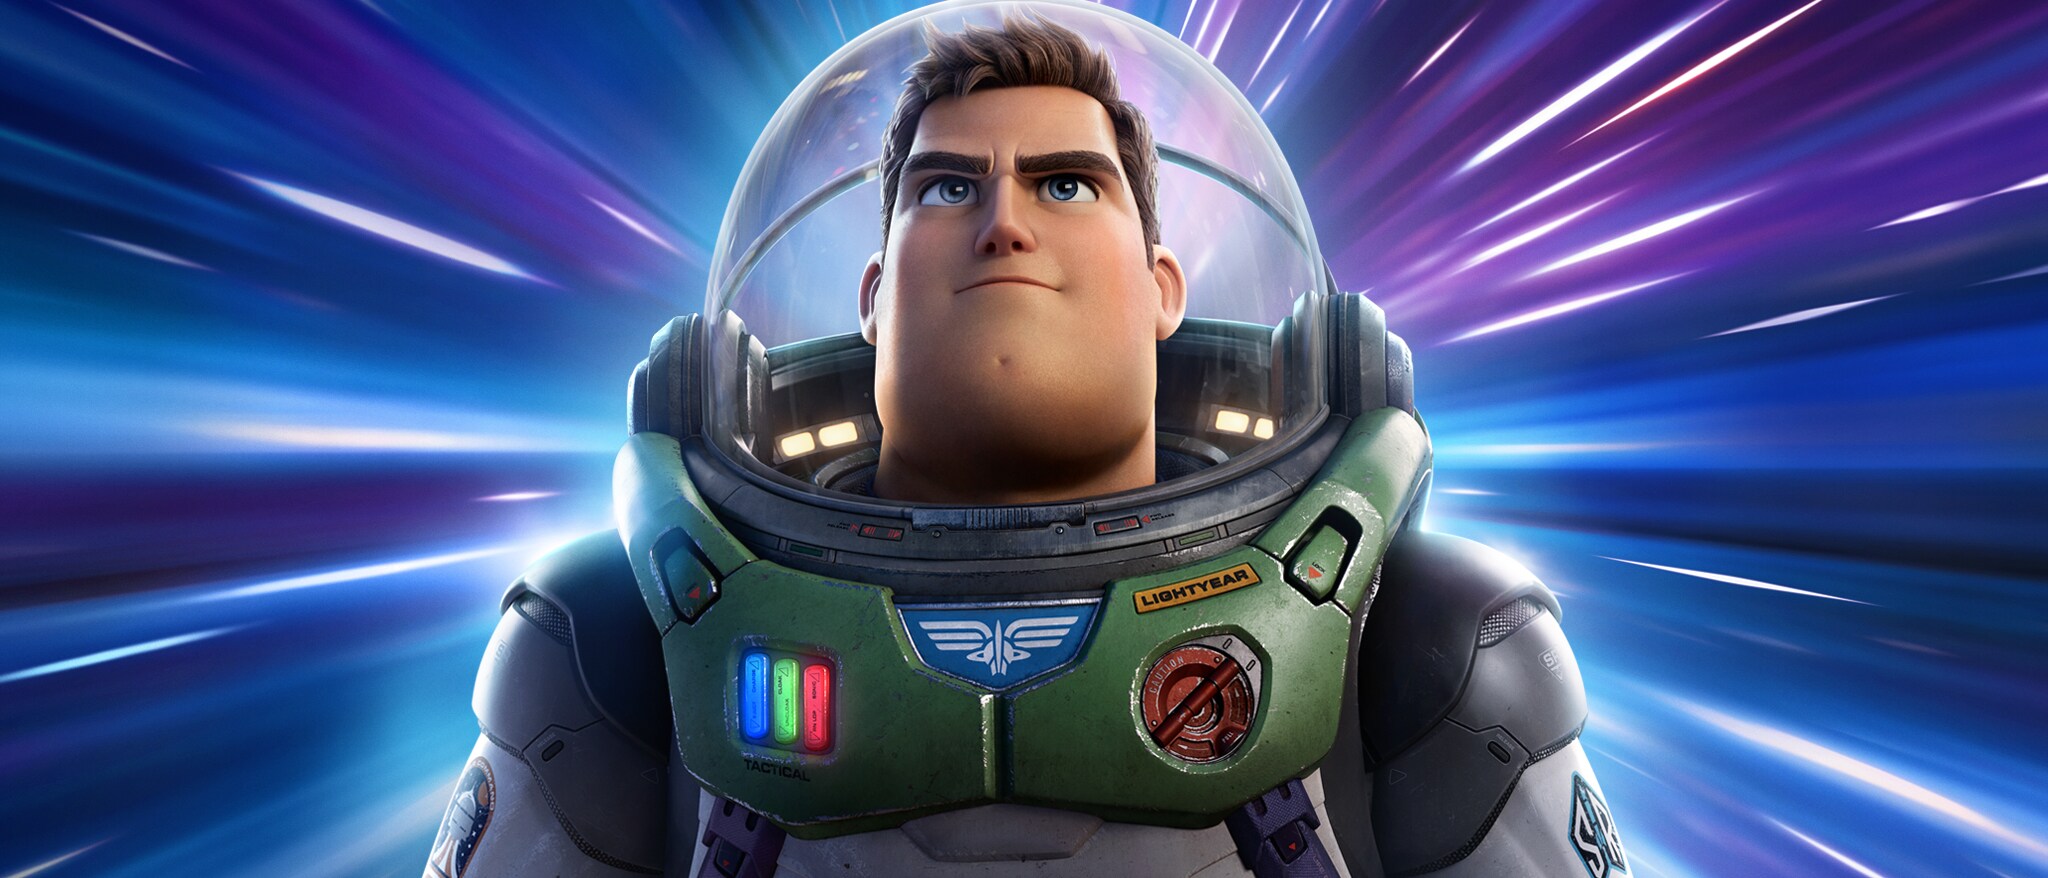 Comprar Disney Pixar Buzz Lightyear of Star Command Ps4 Barato